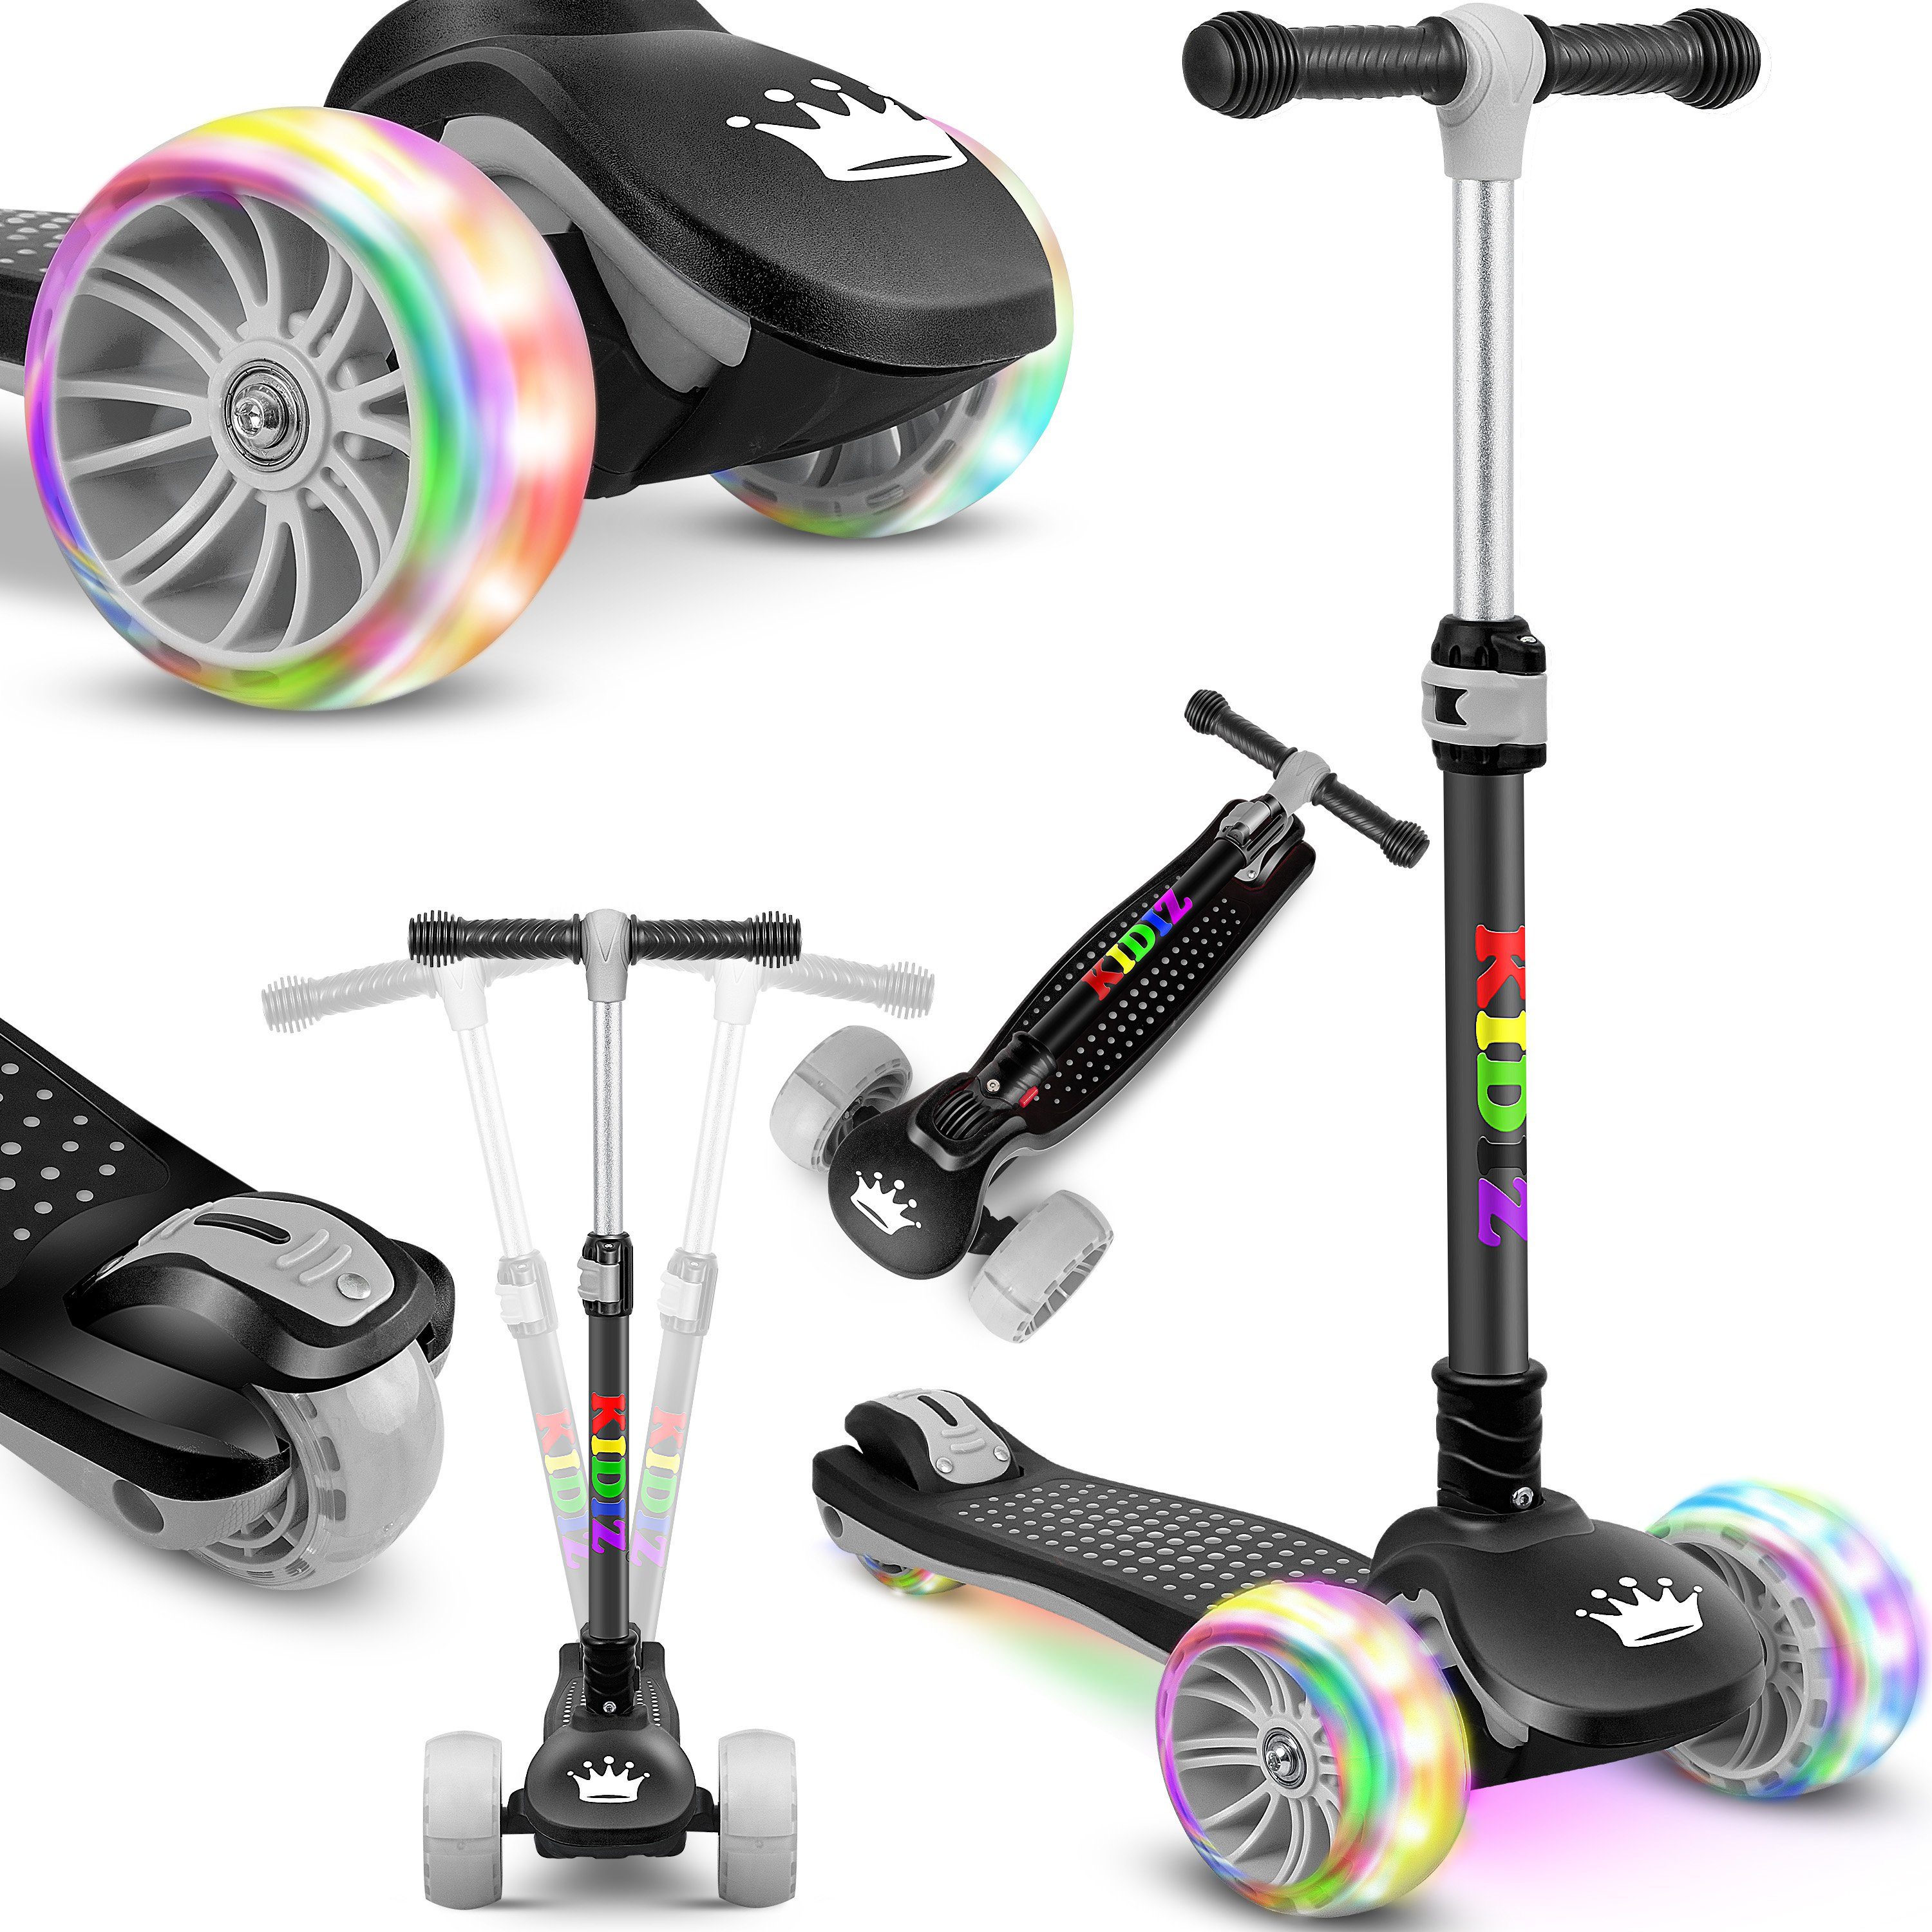 https://i.otto.de/i/otto/d347a1e2-d3e6-51c1-b584-b5dd1bf1272b/kidiz-cityroller-roller-kinder-scooter-x-pro2-dreiradscooter-mit-pu-led-leuchten-schwarz.jpg?$formatz$